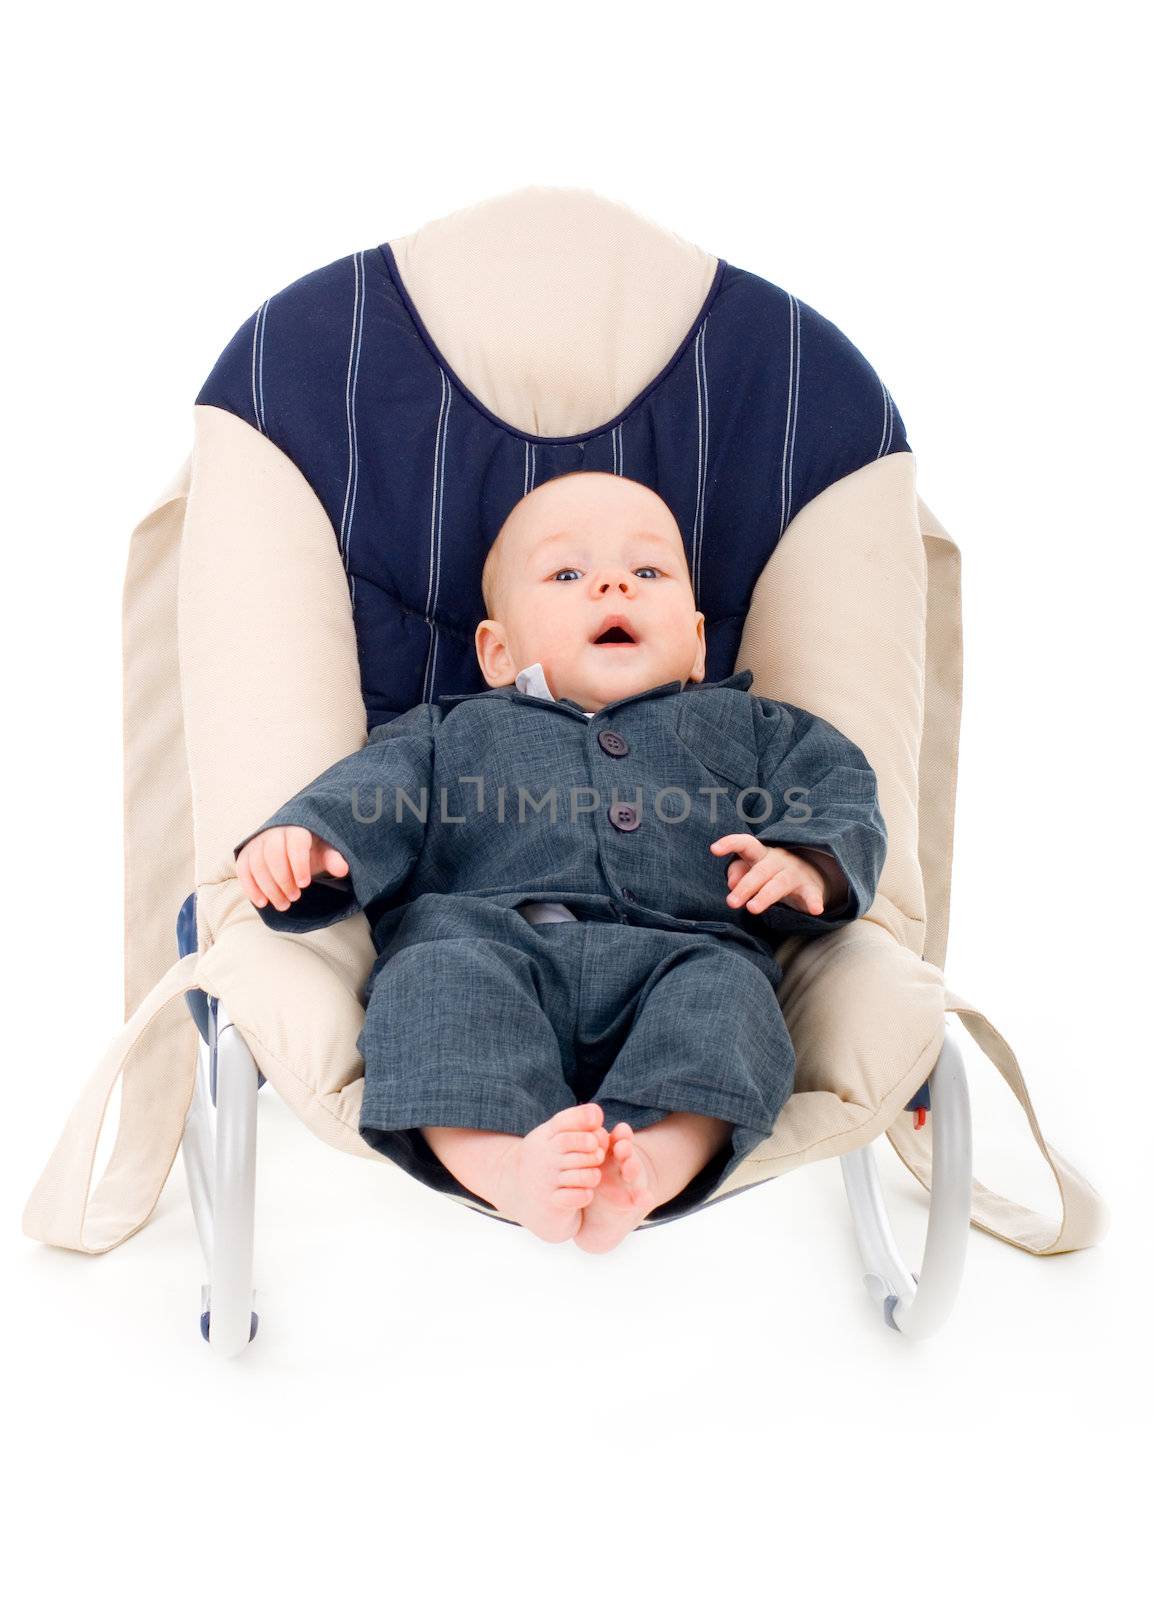 Little infant businessman in a suit sitting